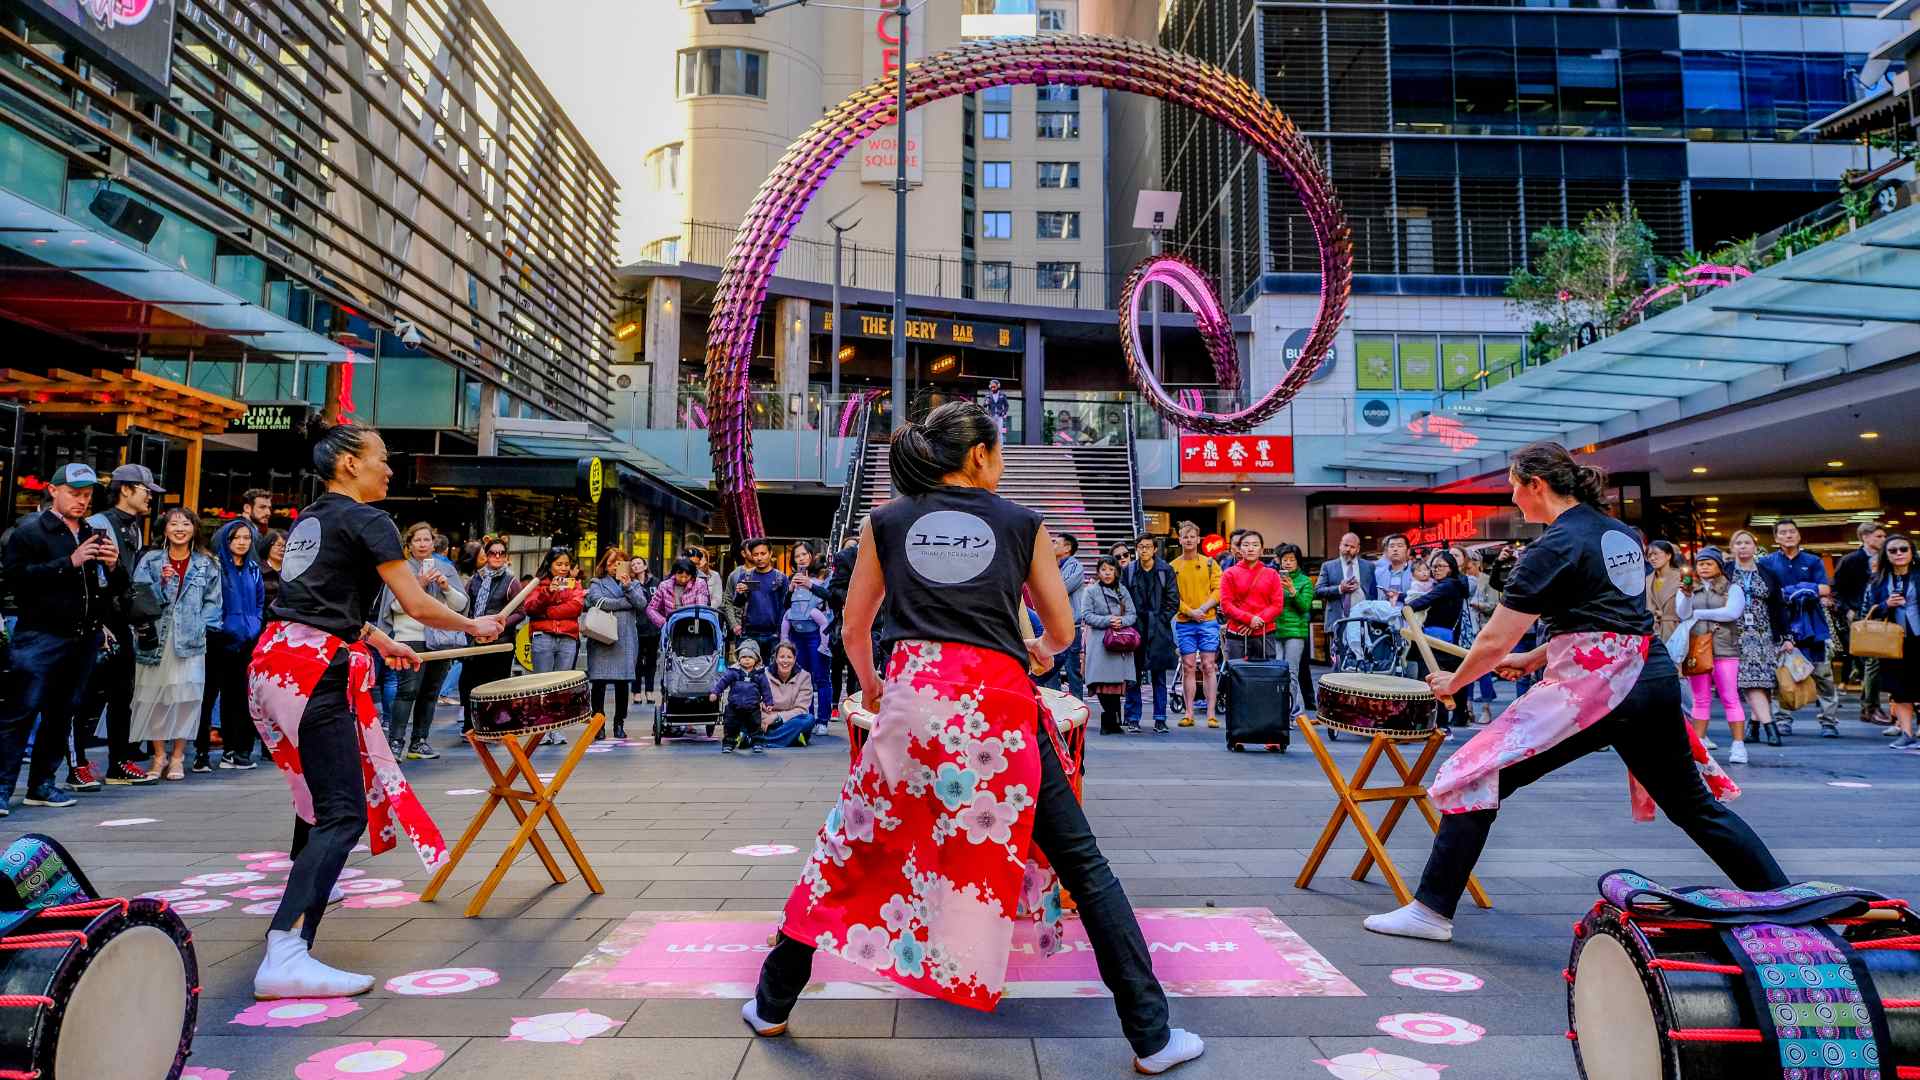 World Square's Cherry Blossom Festival